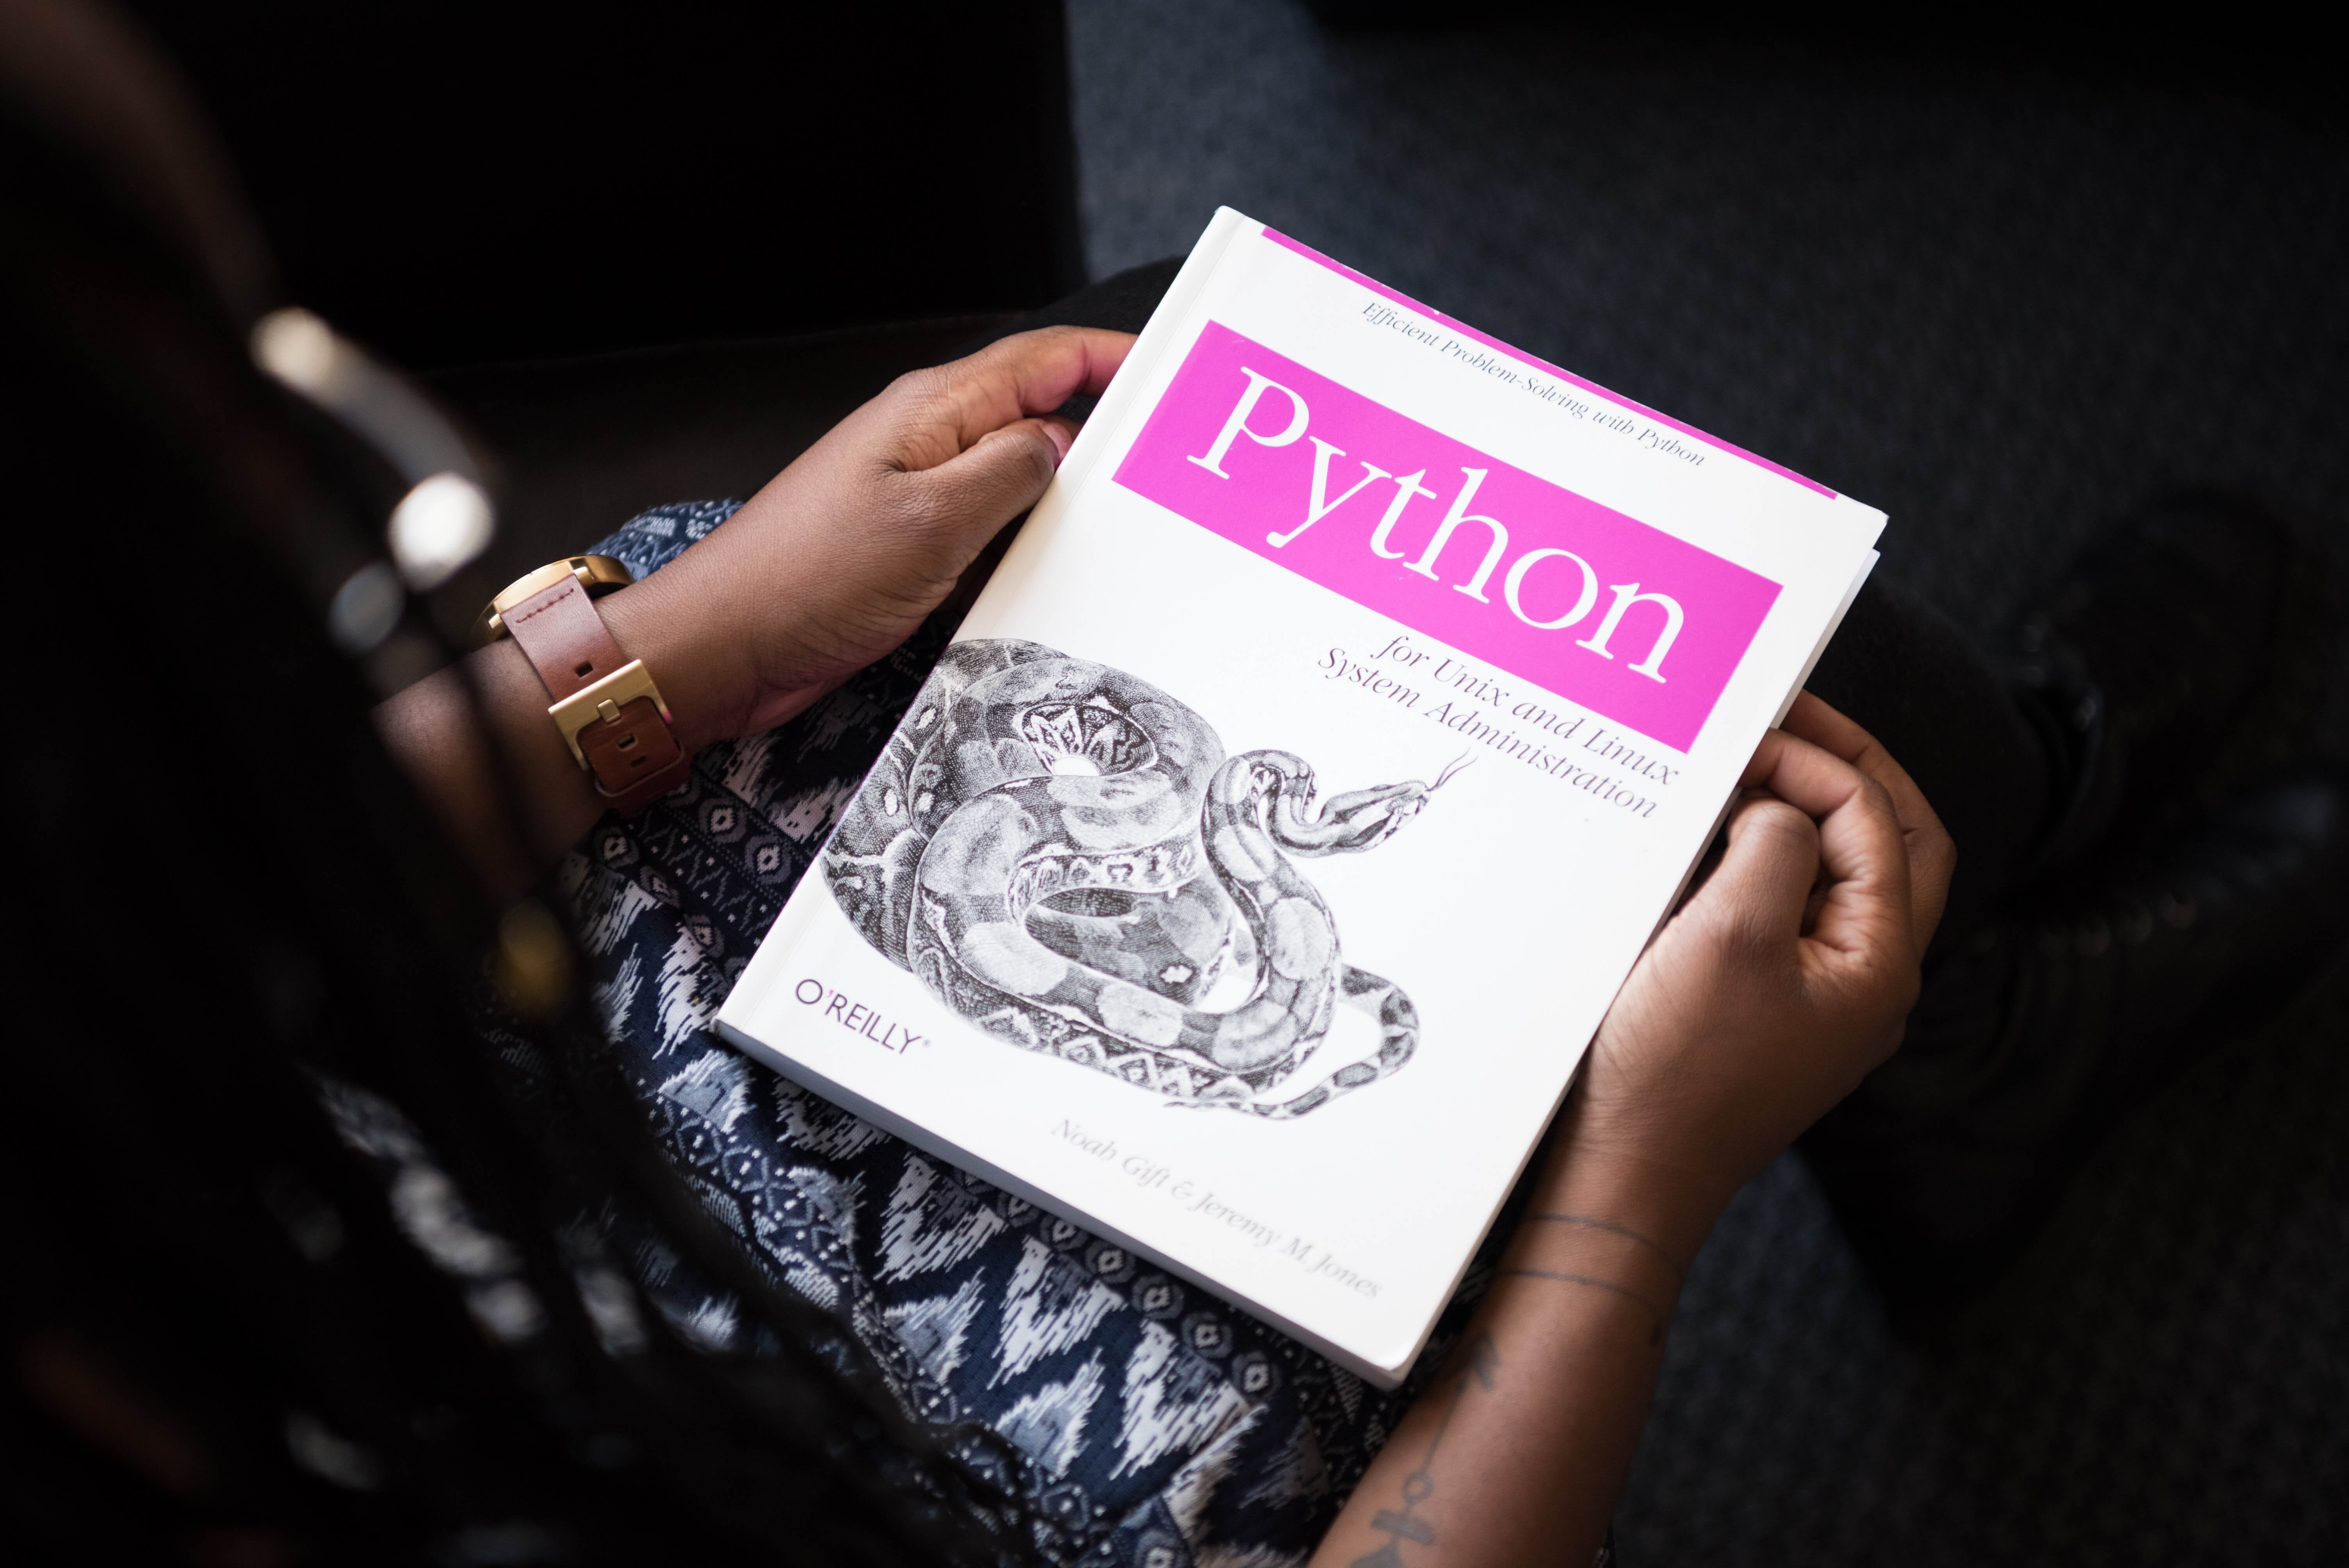 srishti campus Python- The Dynamic language that changes worlds trivandrum